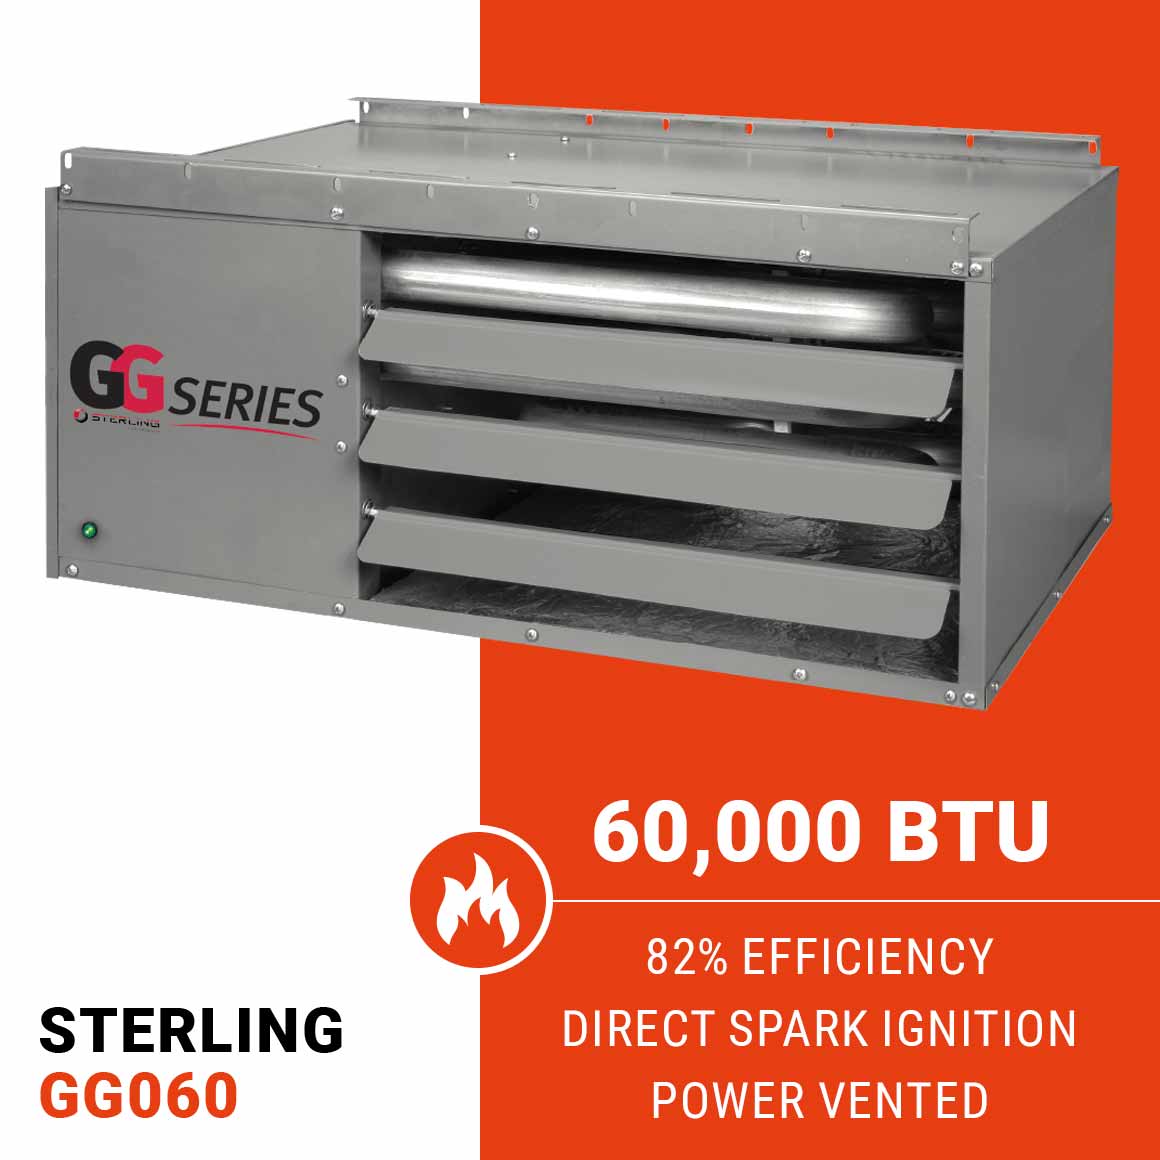 Sterling GG060 Garage Heater